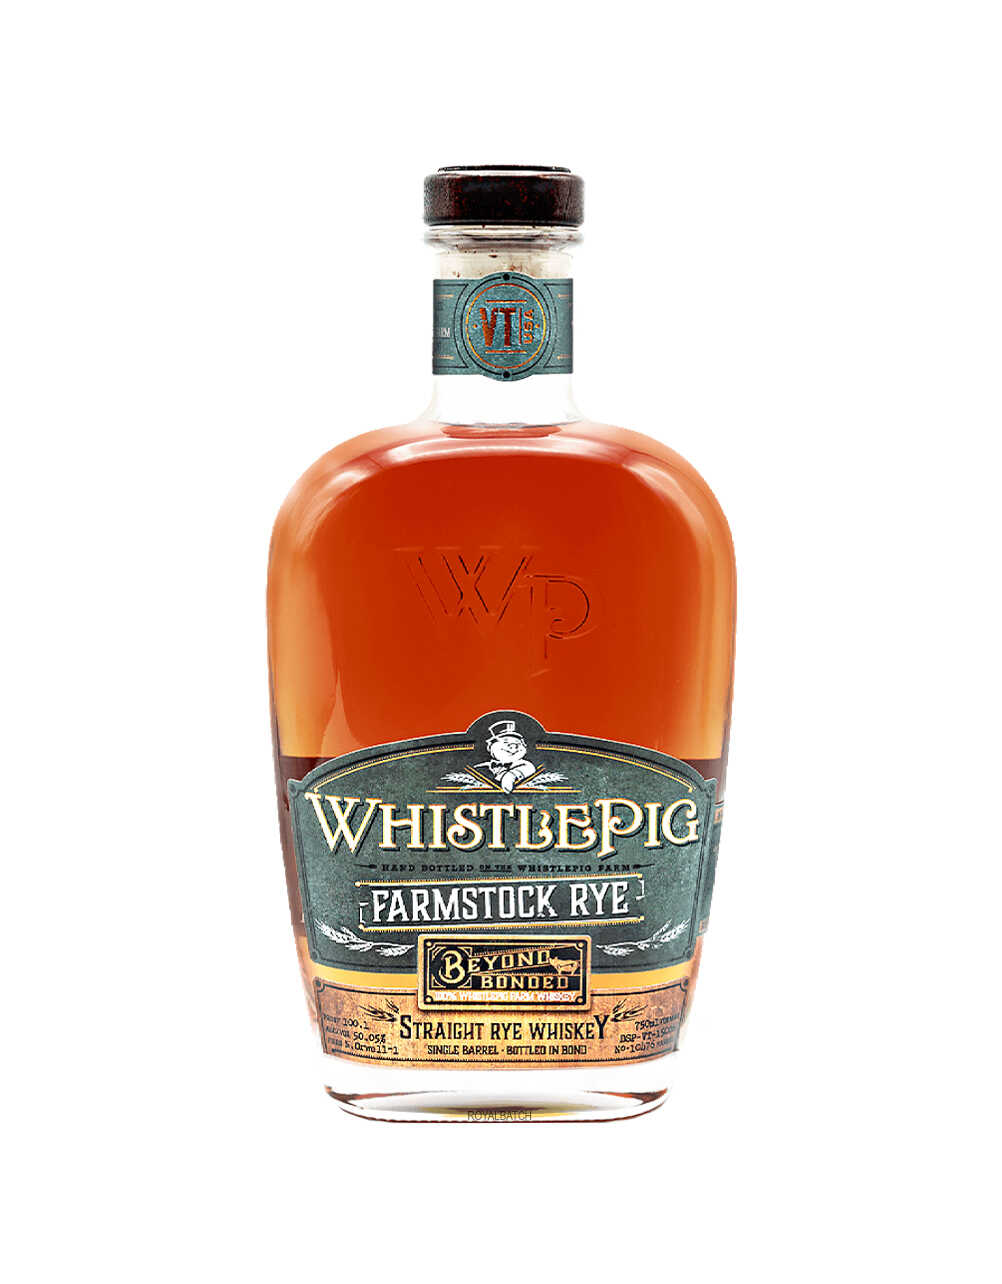 WhistlePig Farmstock Rye Beyond Bonded Single Barrel Rye Whiskey